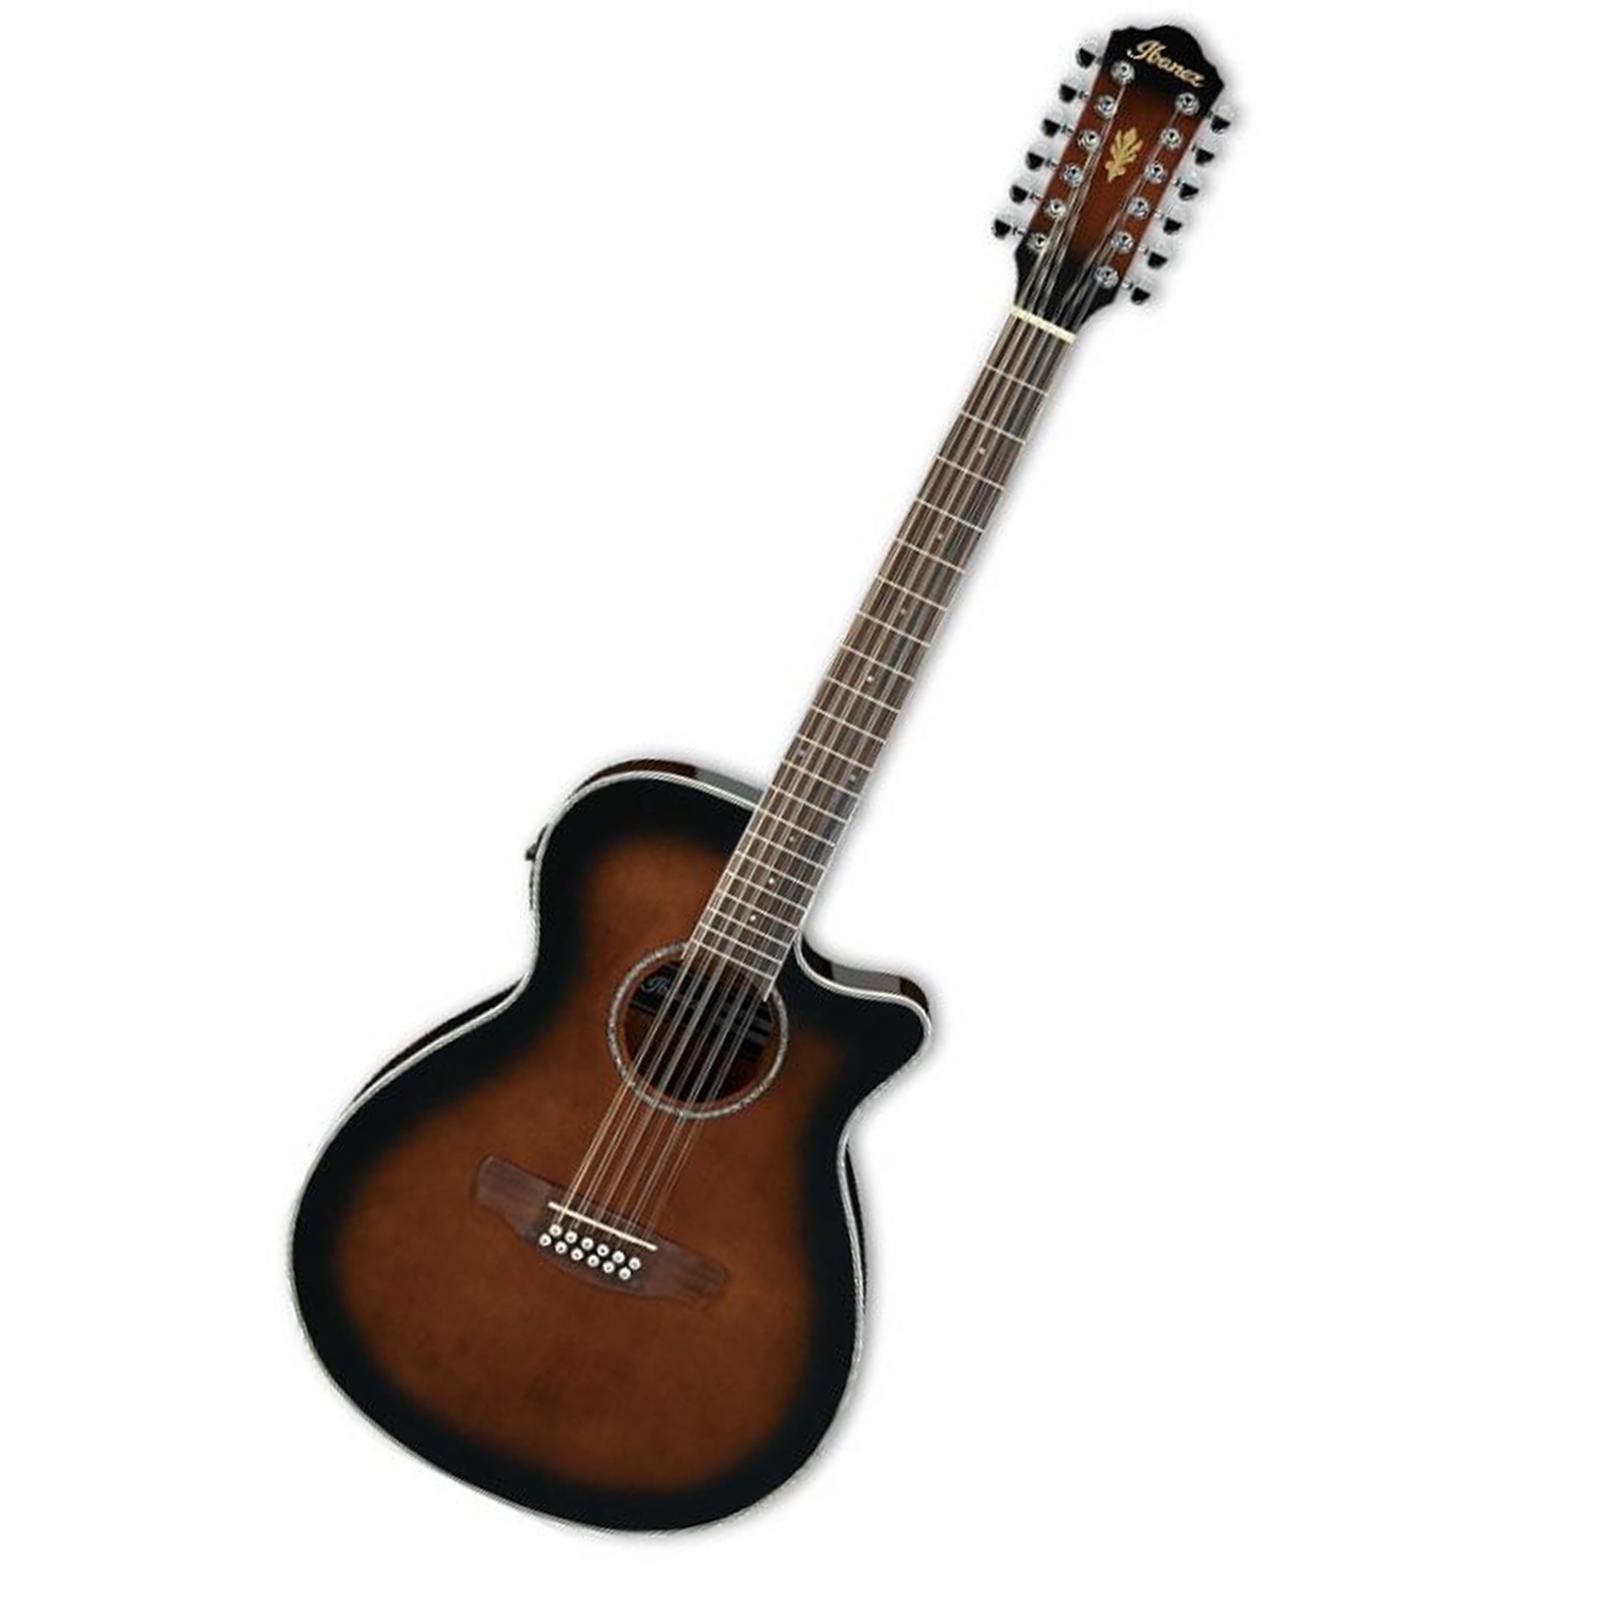 Ibanez AEG1812IIDVS 12-String Acoustic-Electric Guitar